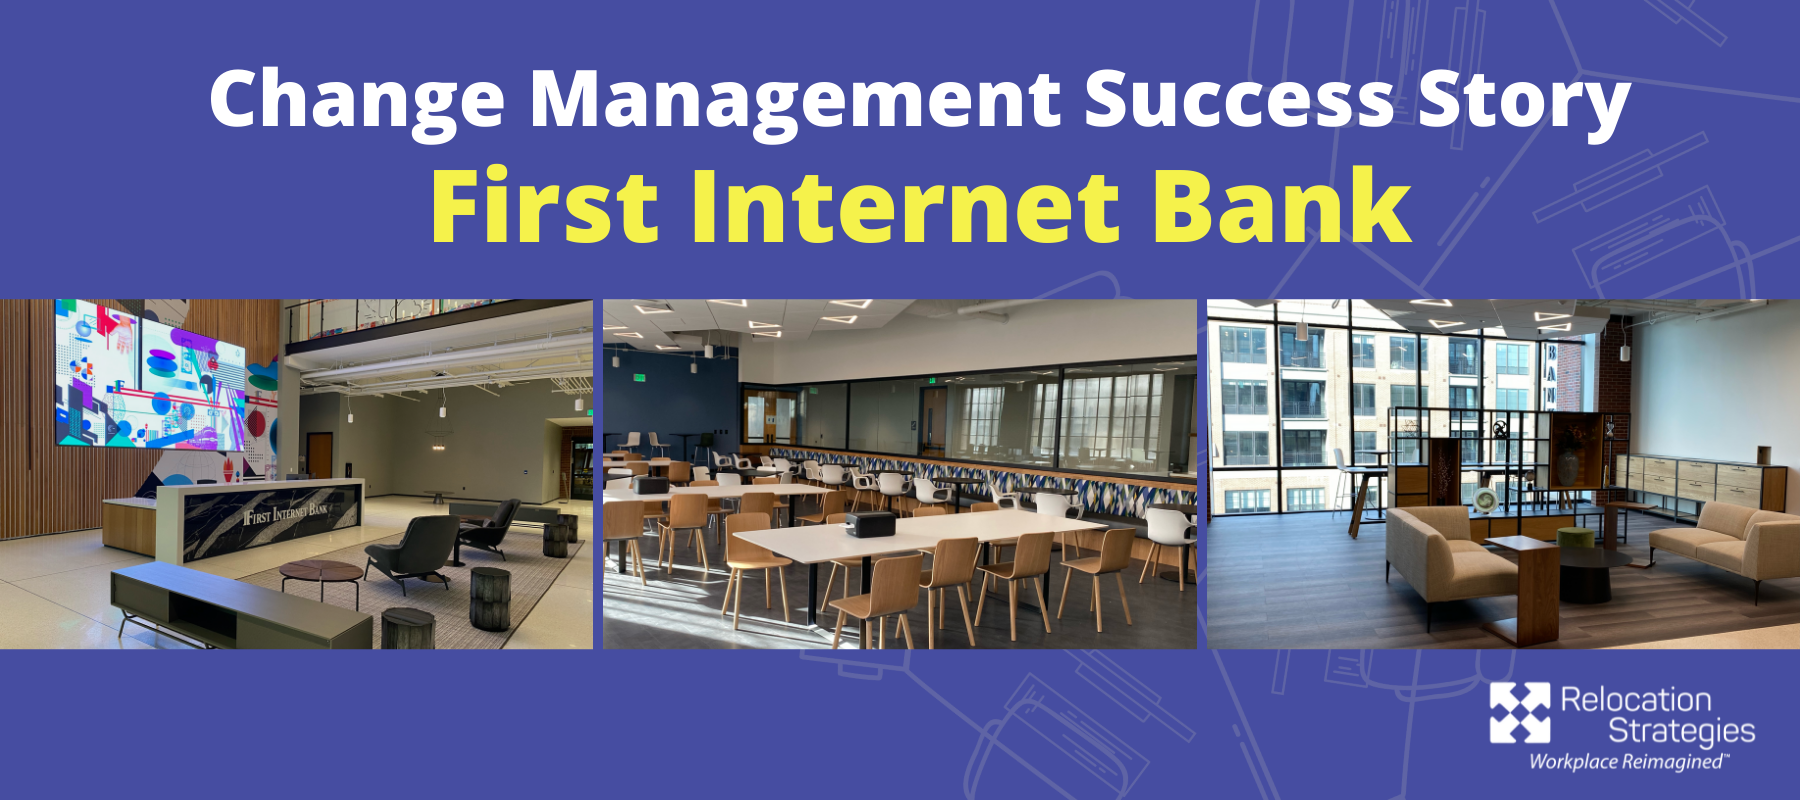 Change Management Success Story: First Internet Bank